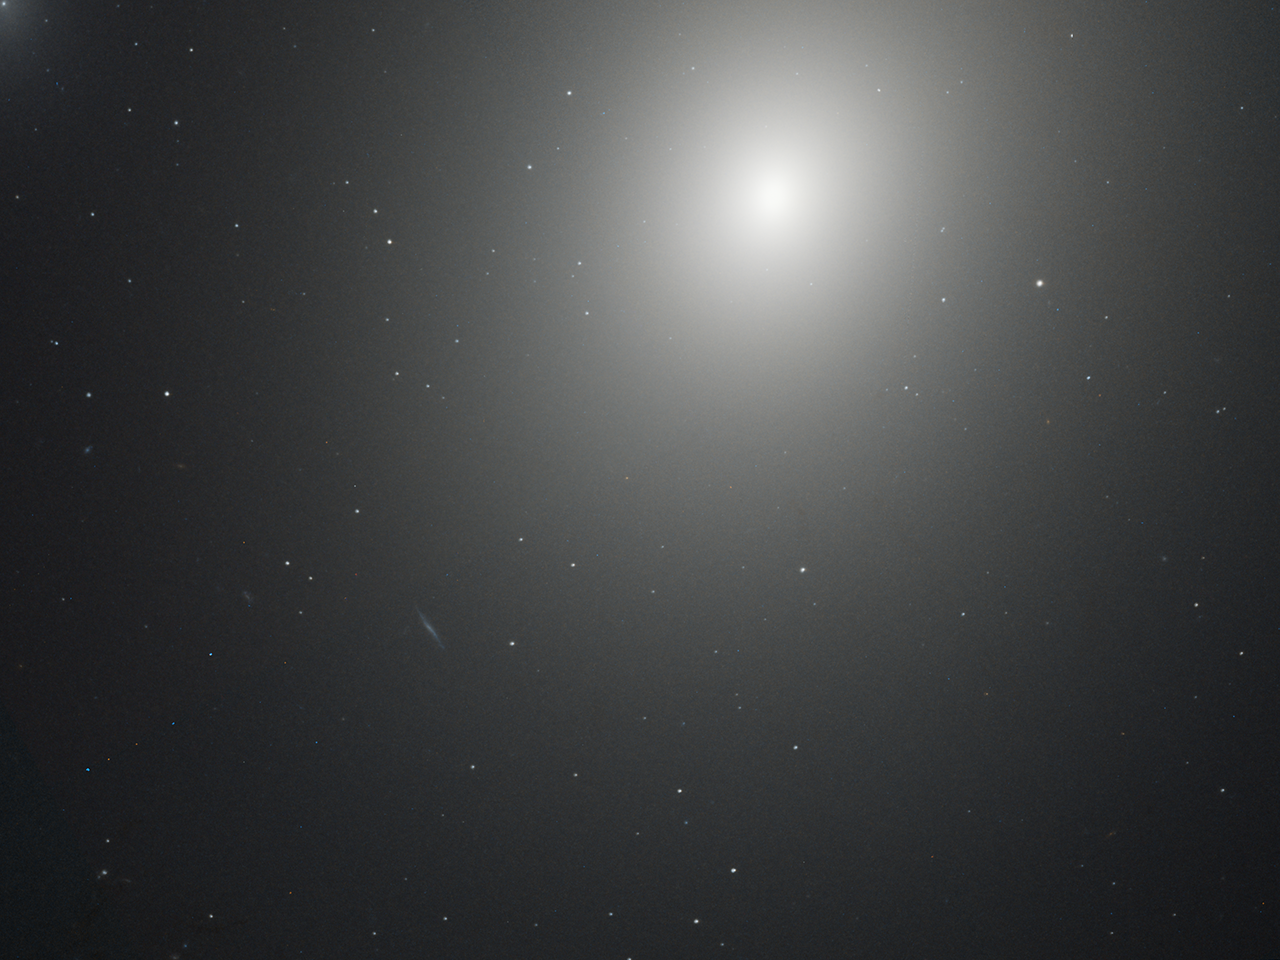 Hubble image of M86